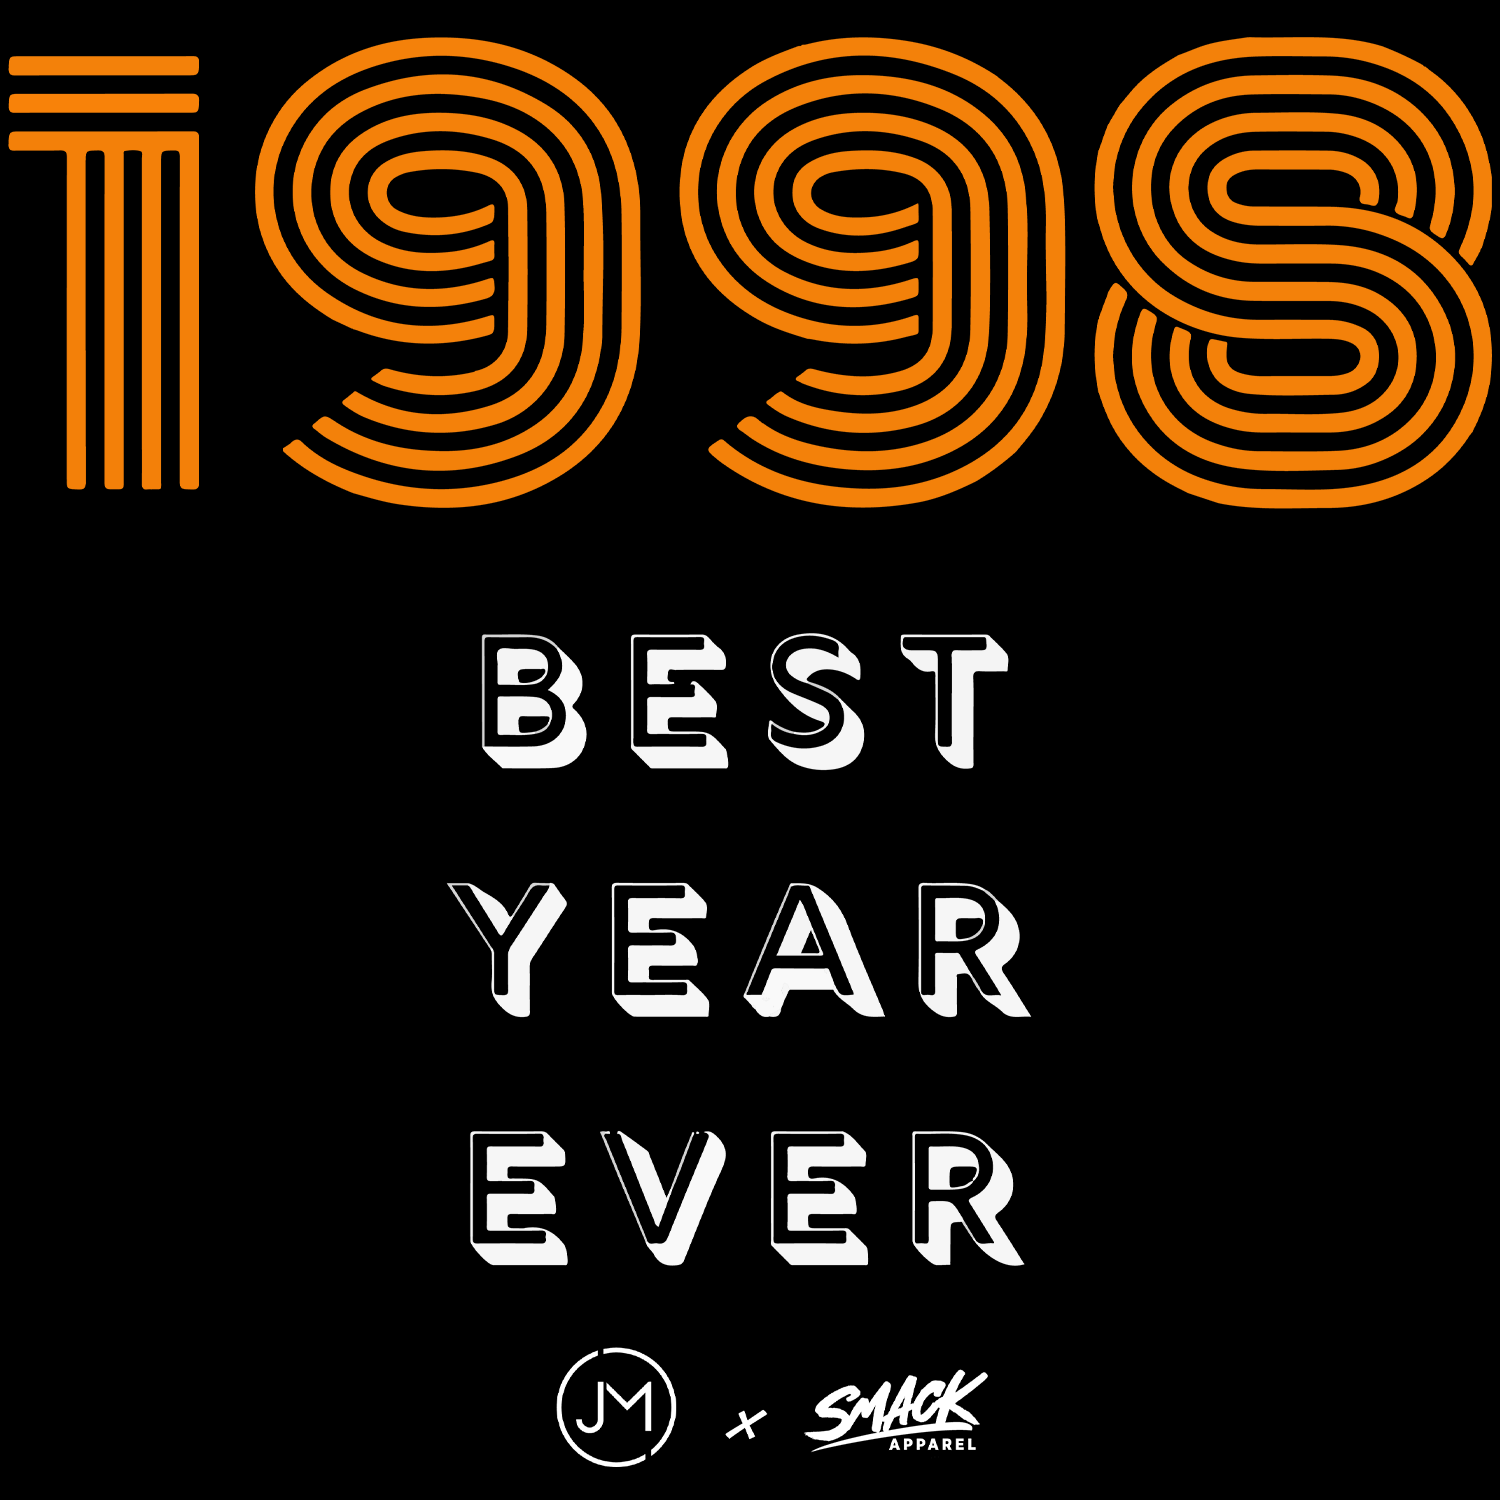 1998 - The Best Year Ever | Josh Mancuso x Smack Apparel